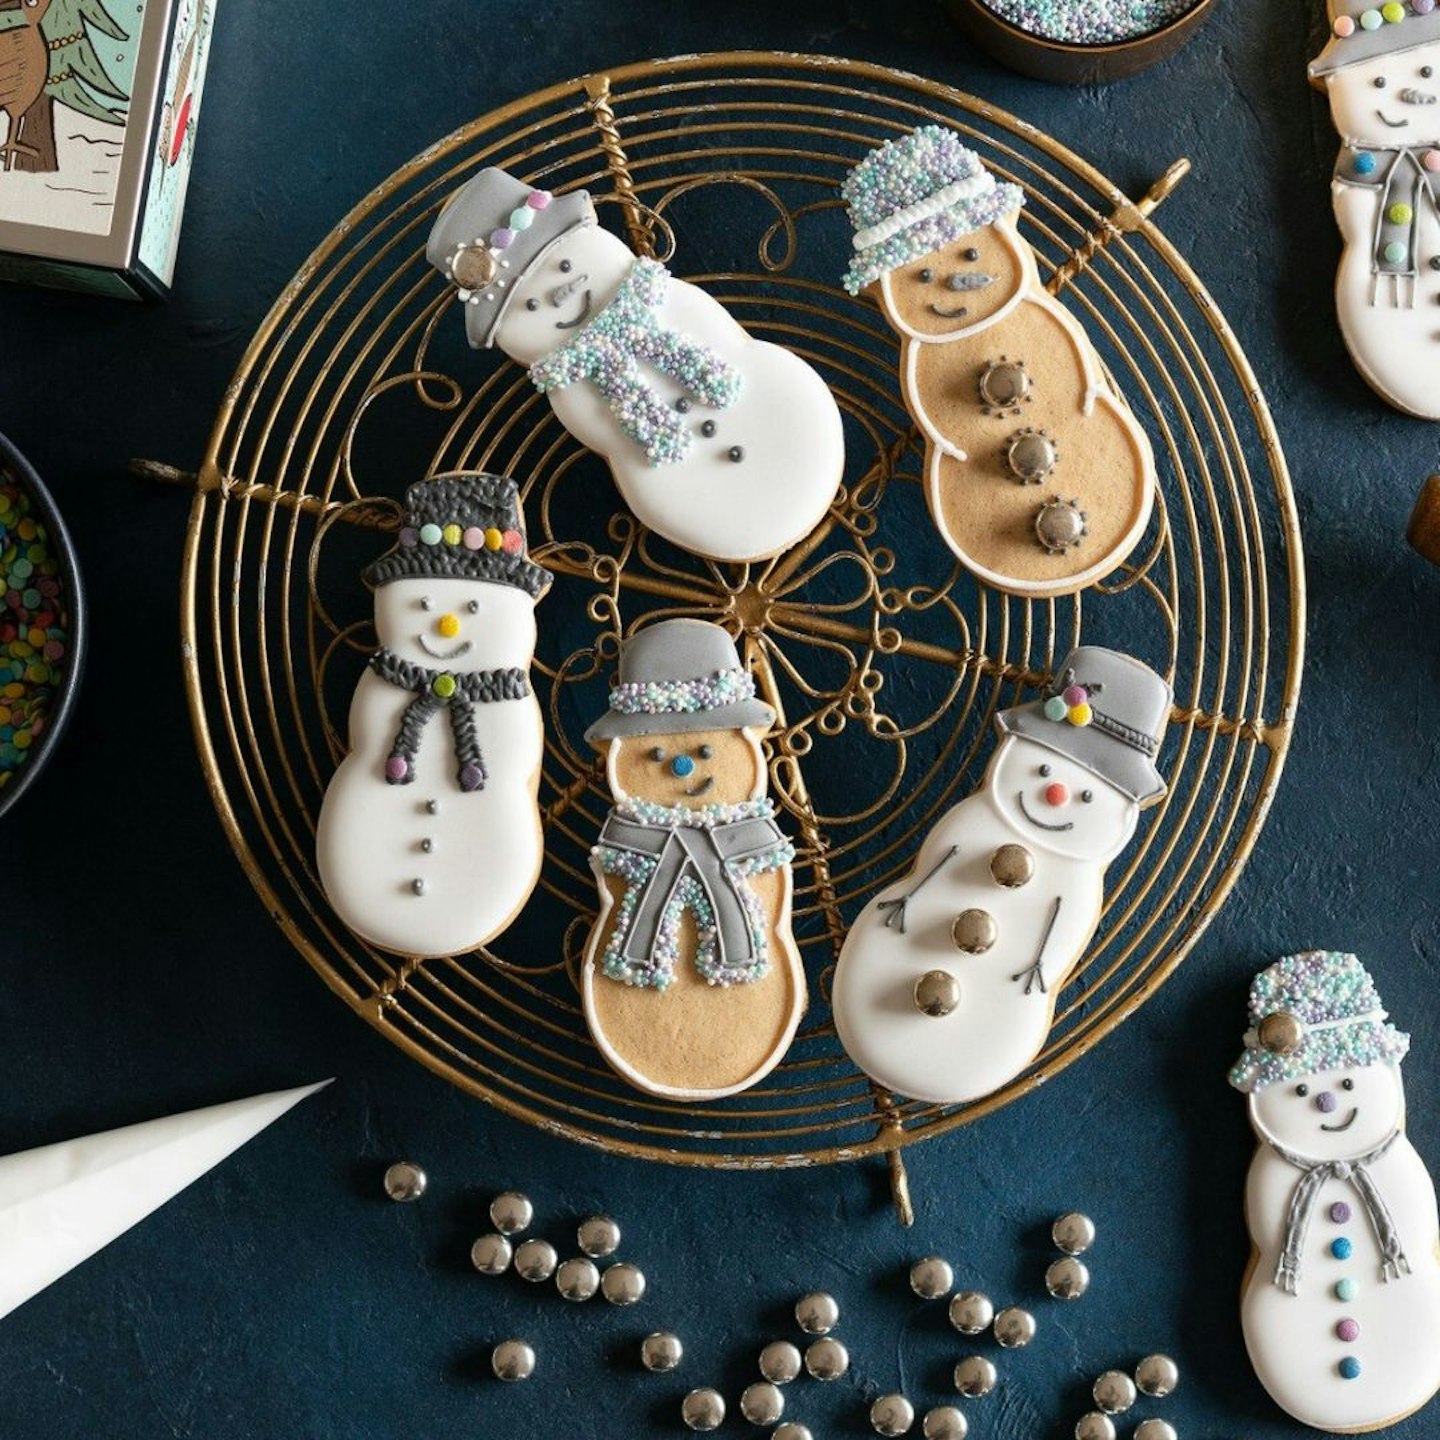 The best cookie decorating kits: Snowman DIY Kit